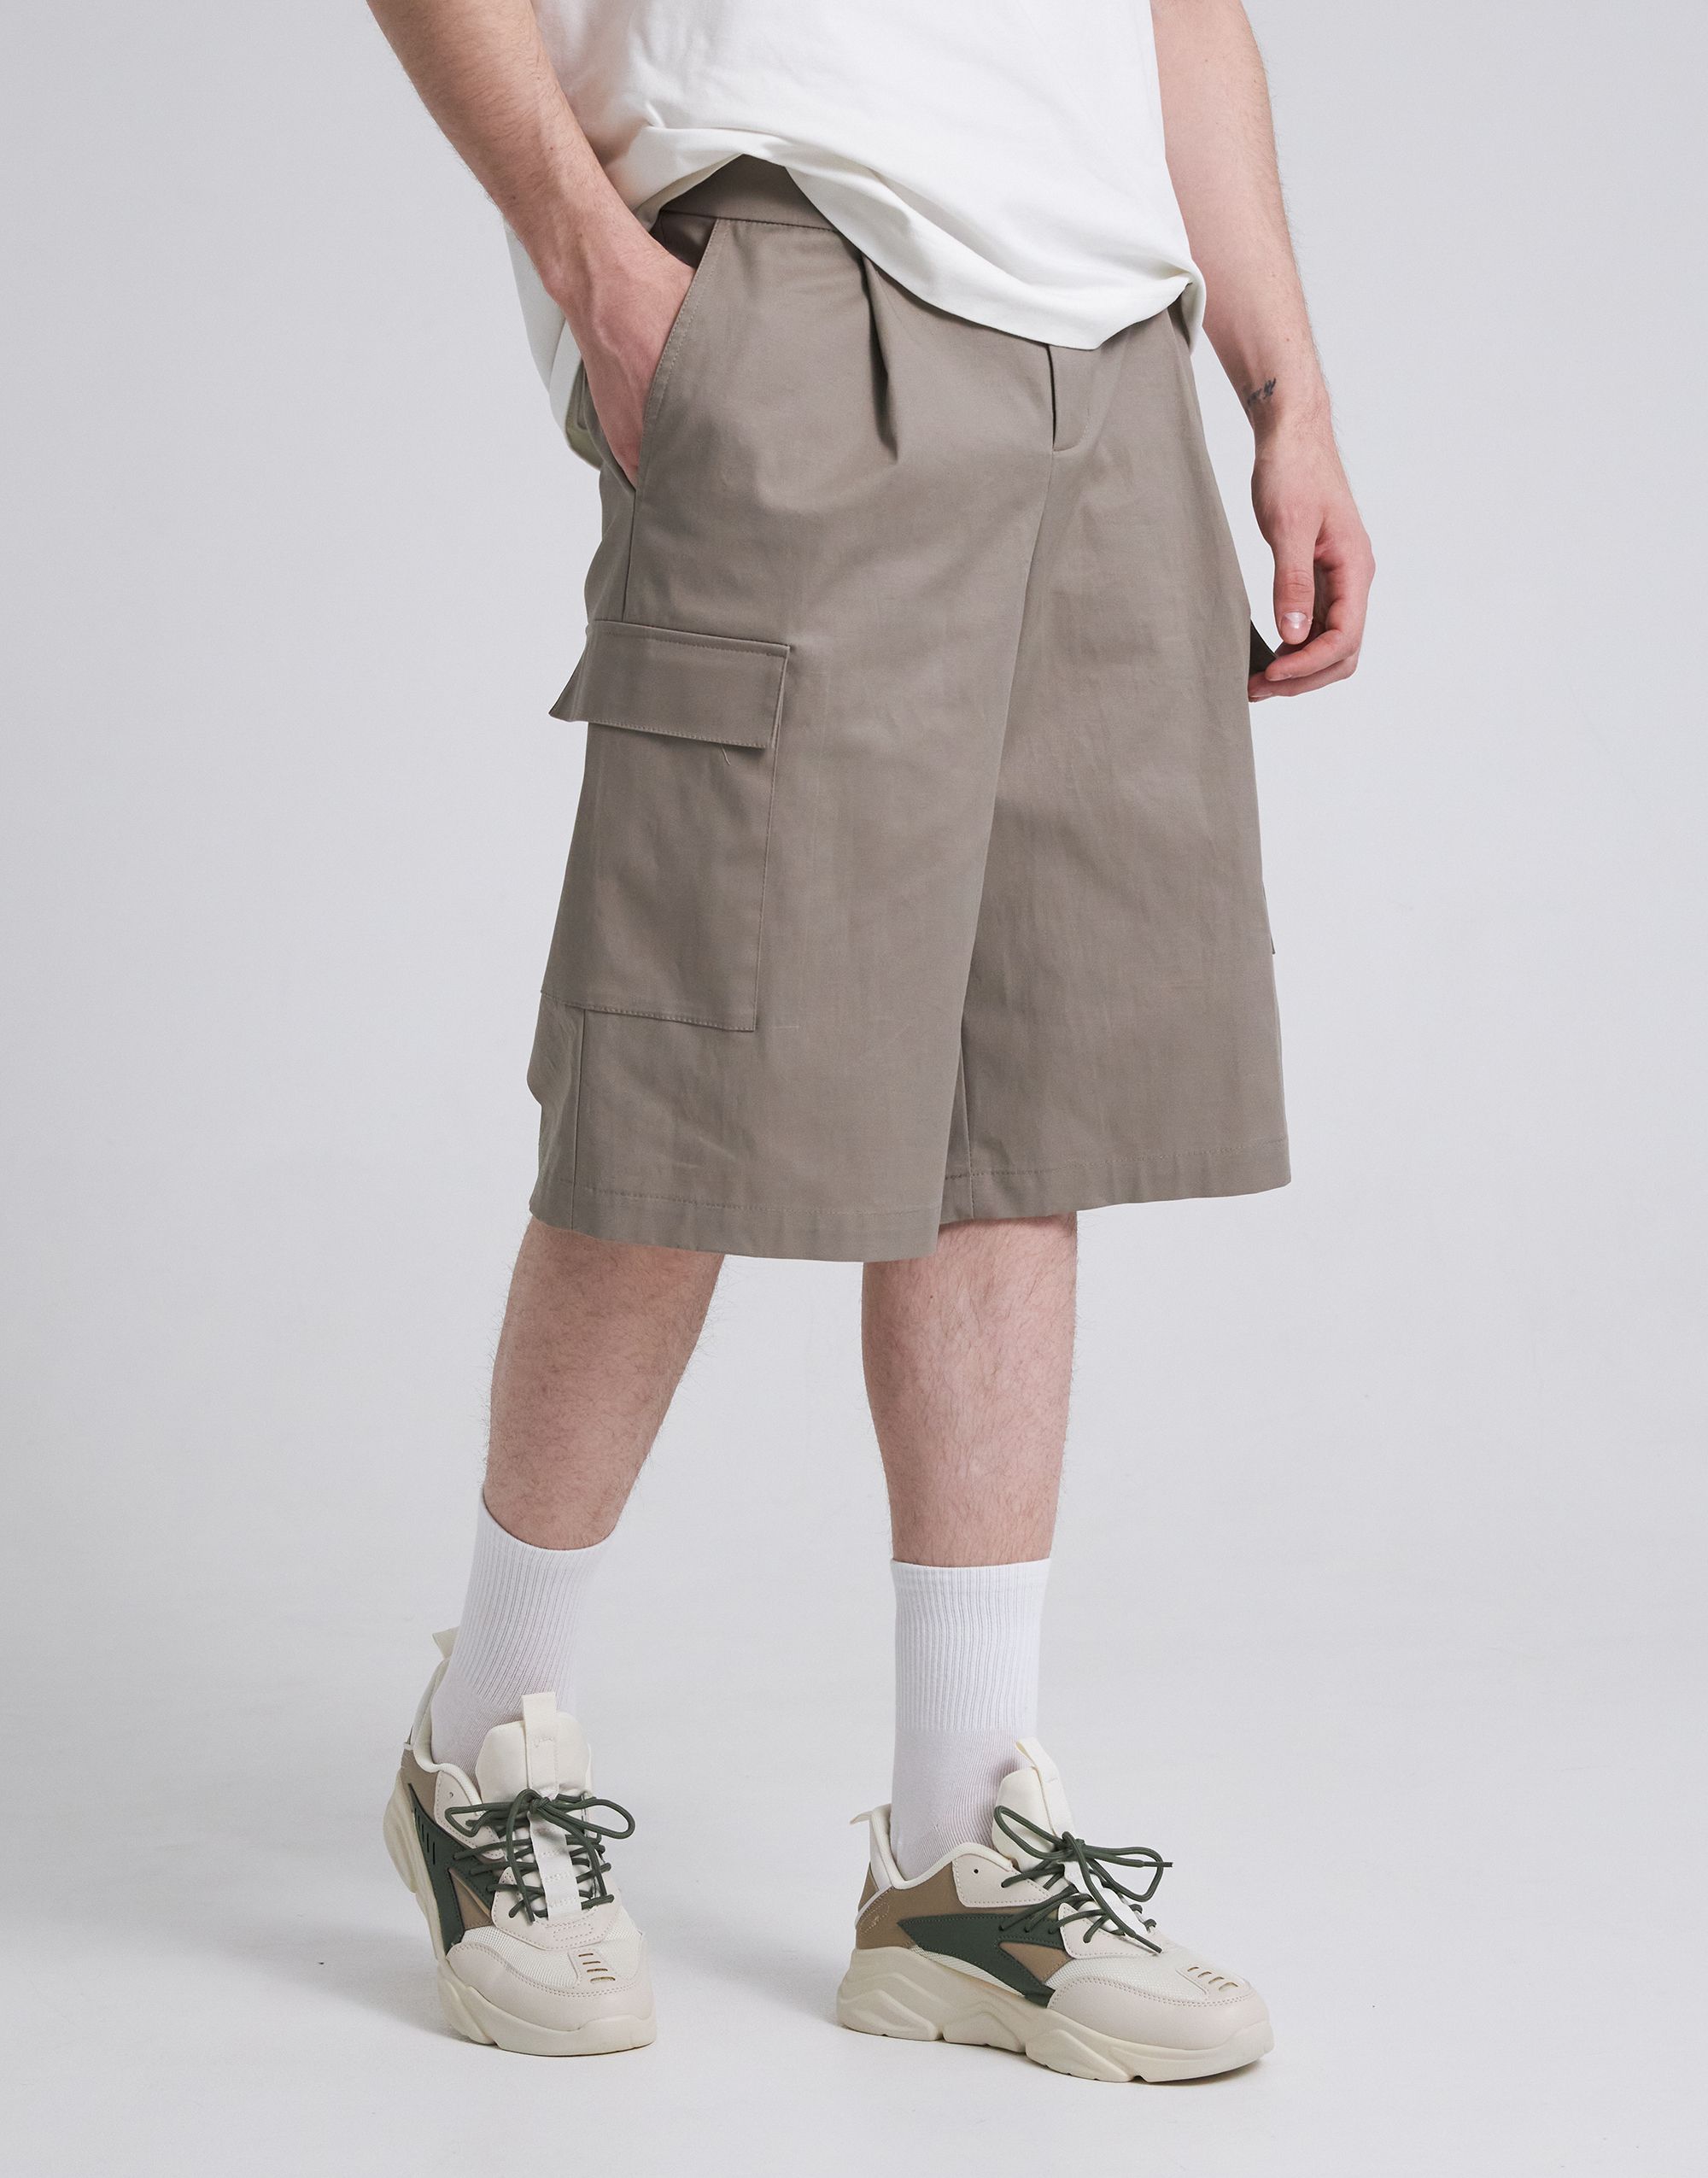 Men's shorts, pattern №1035